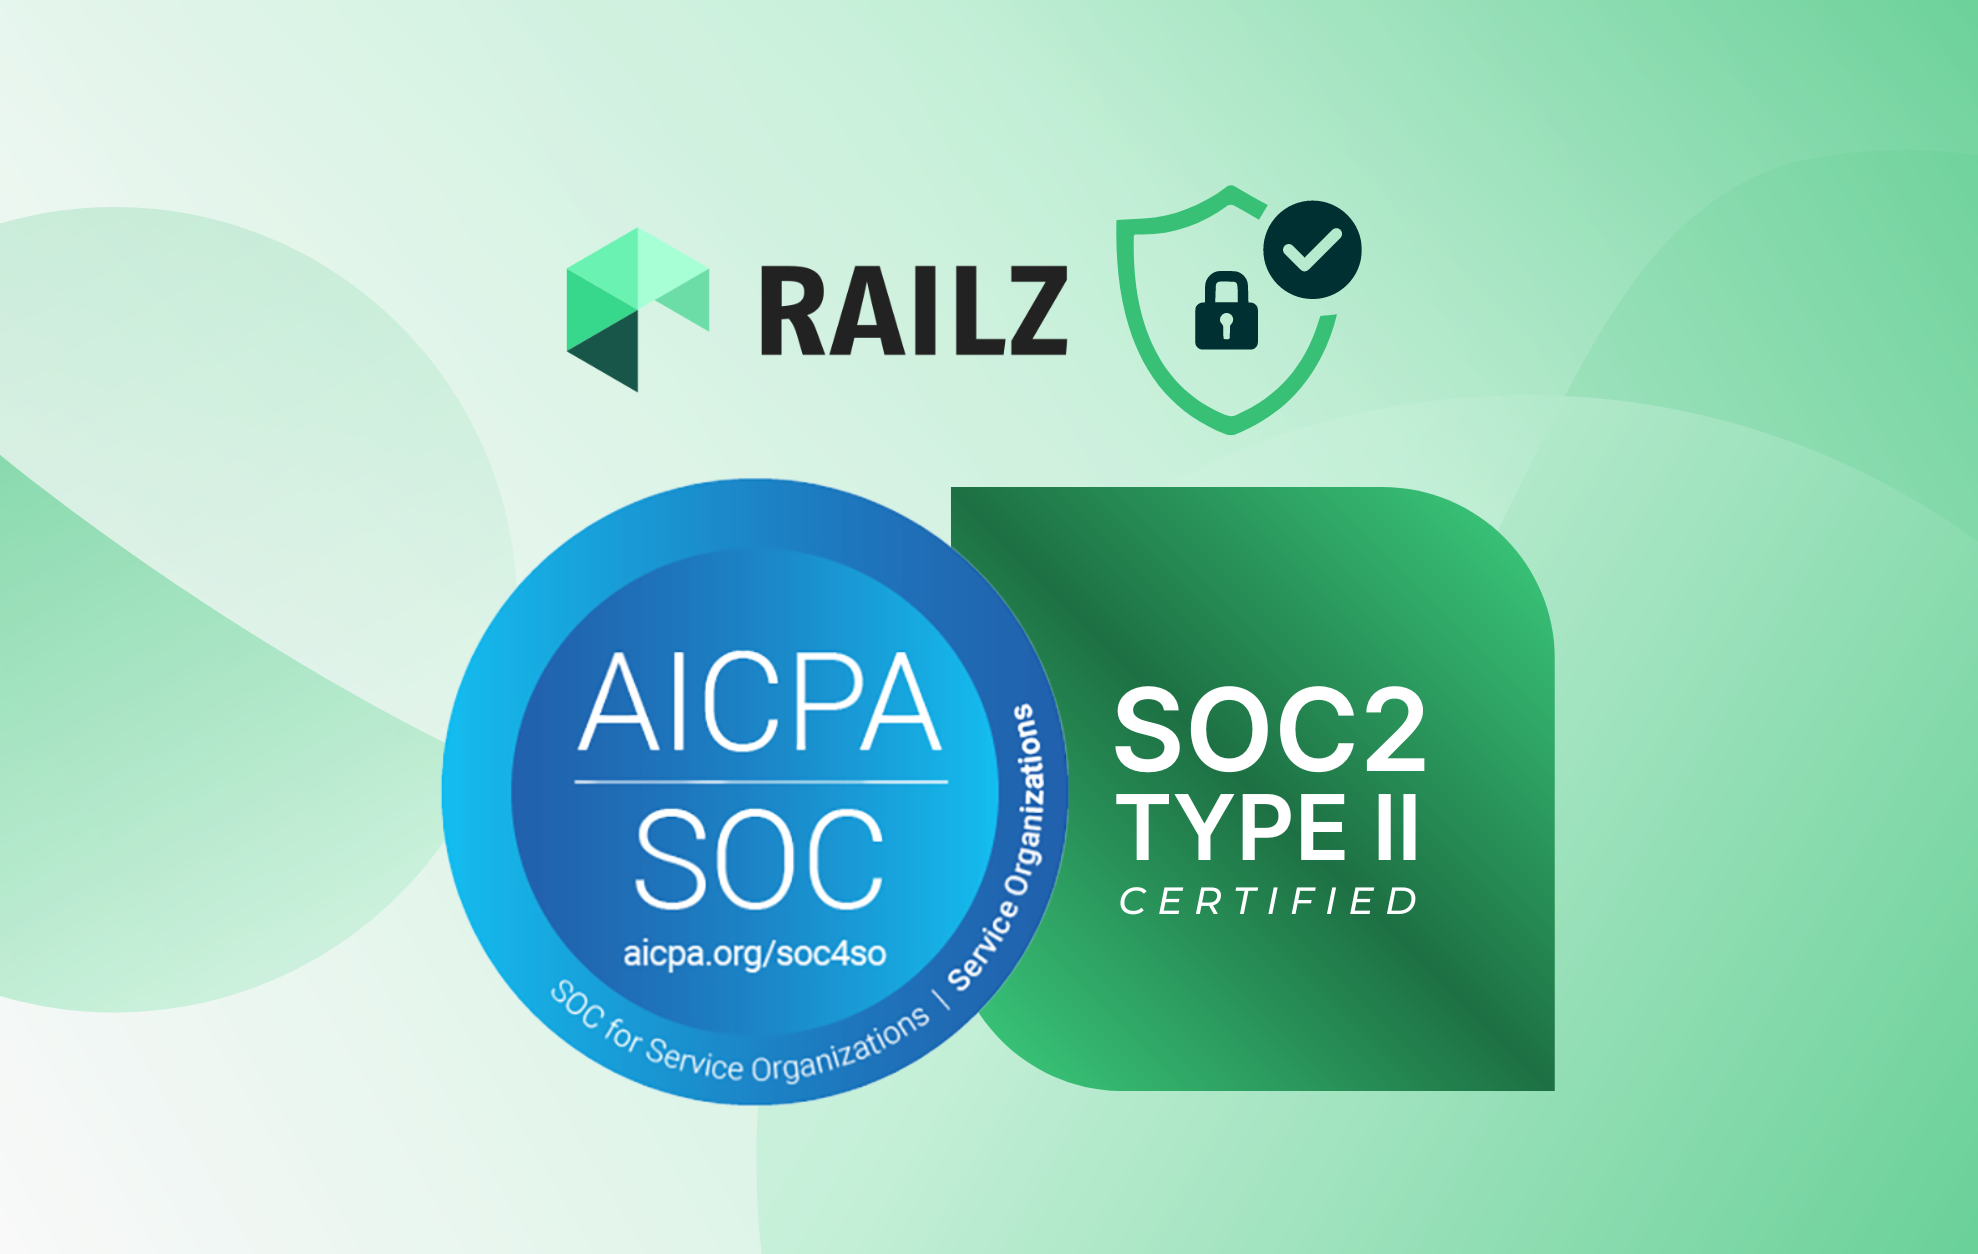 Railz is officially SOC II Type 2 compliant